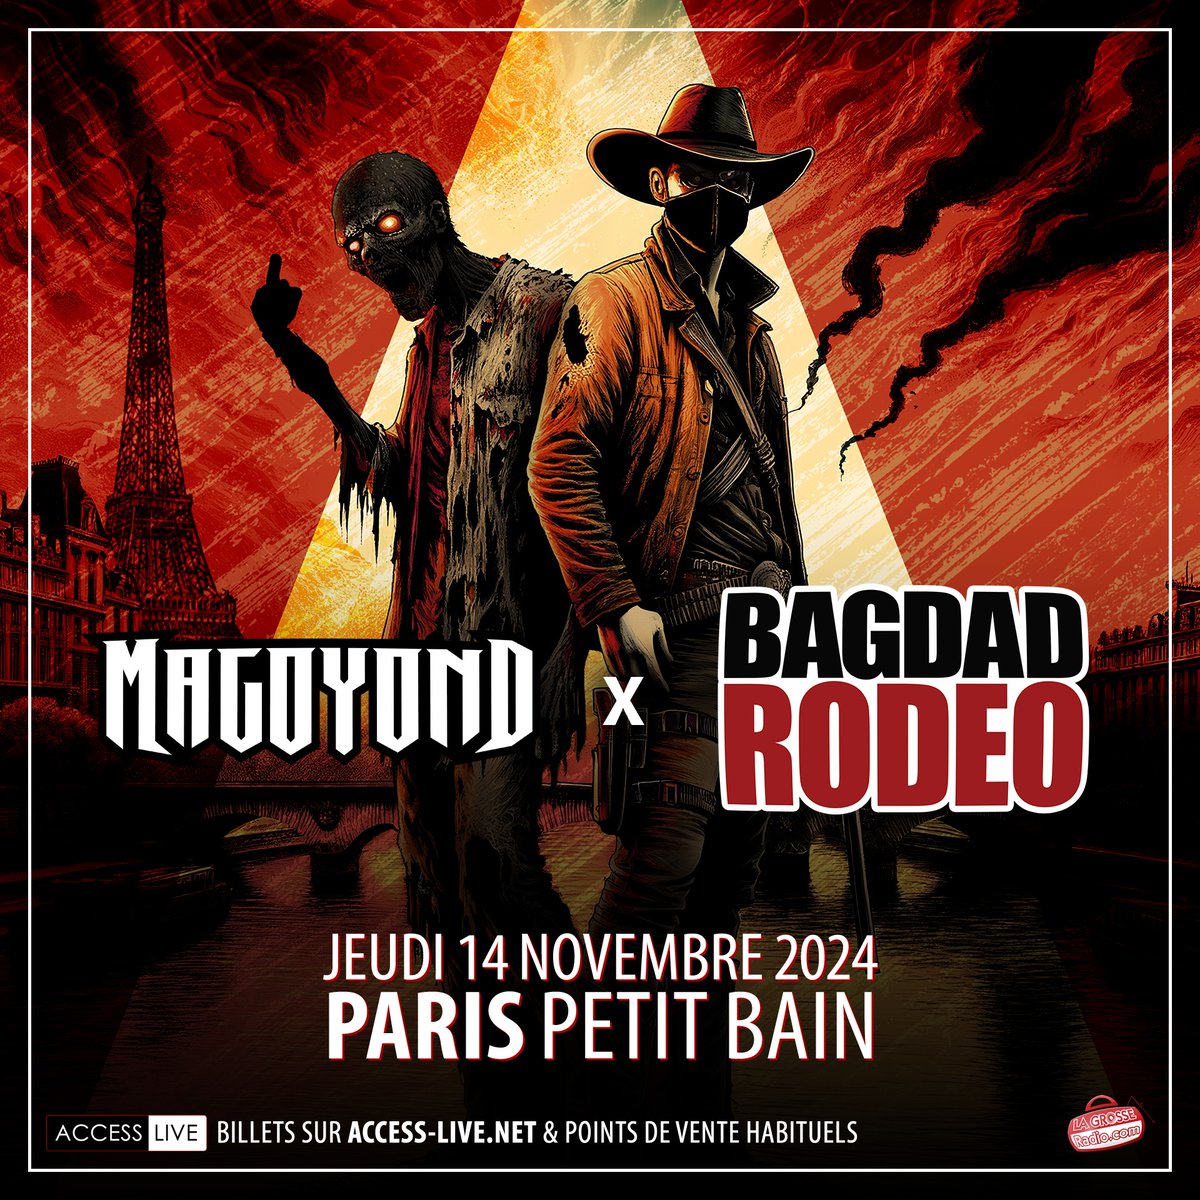 Bagdad Rodeo - Magoyond in der Petit Bain Tickets